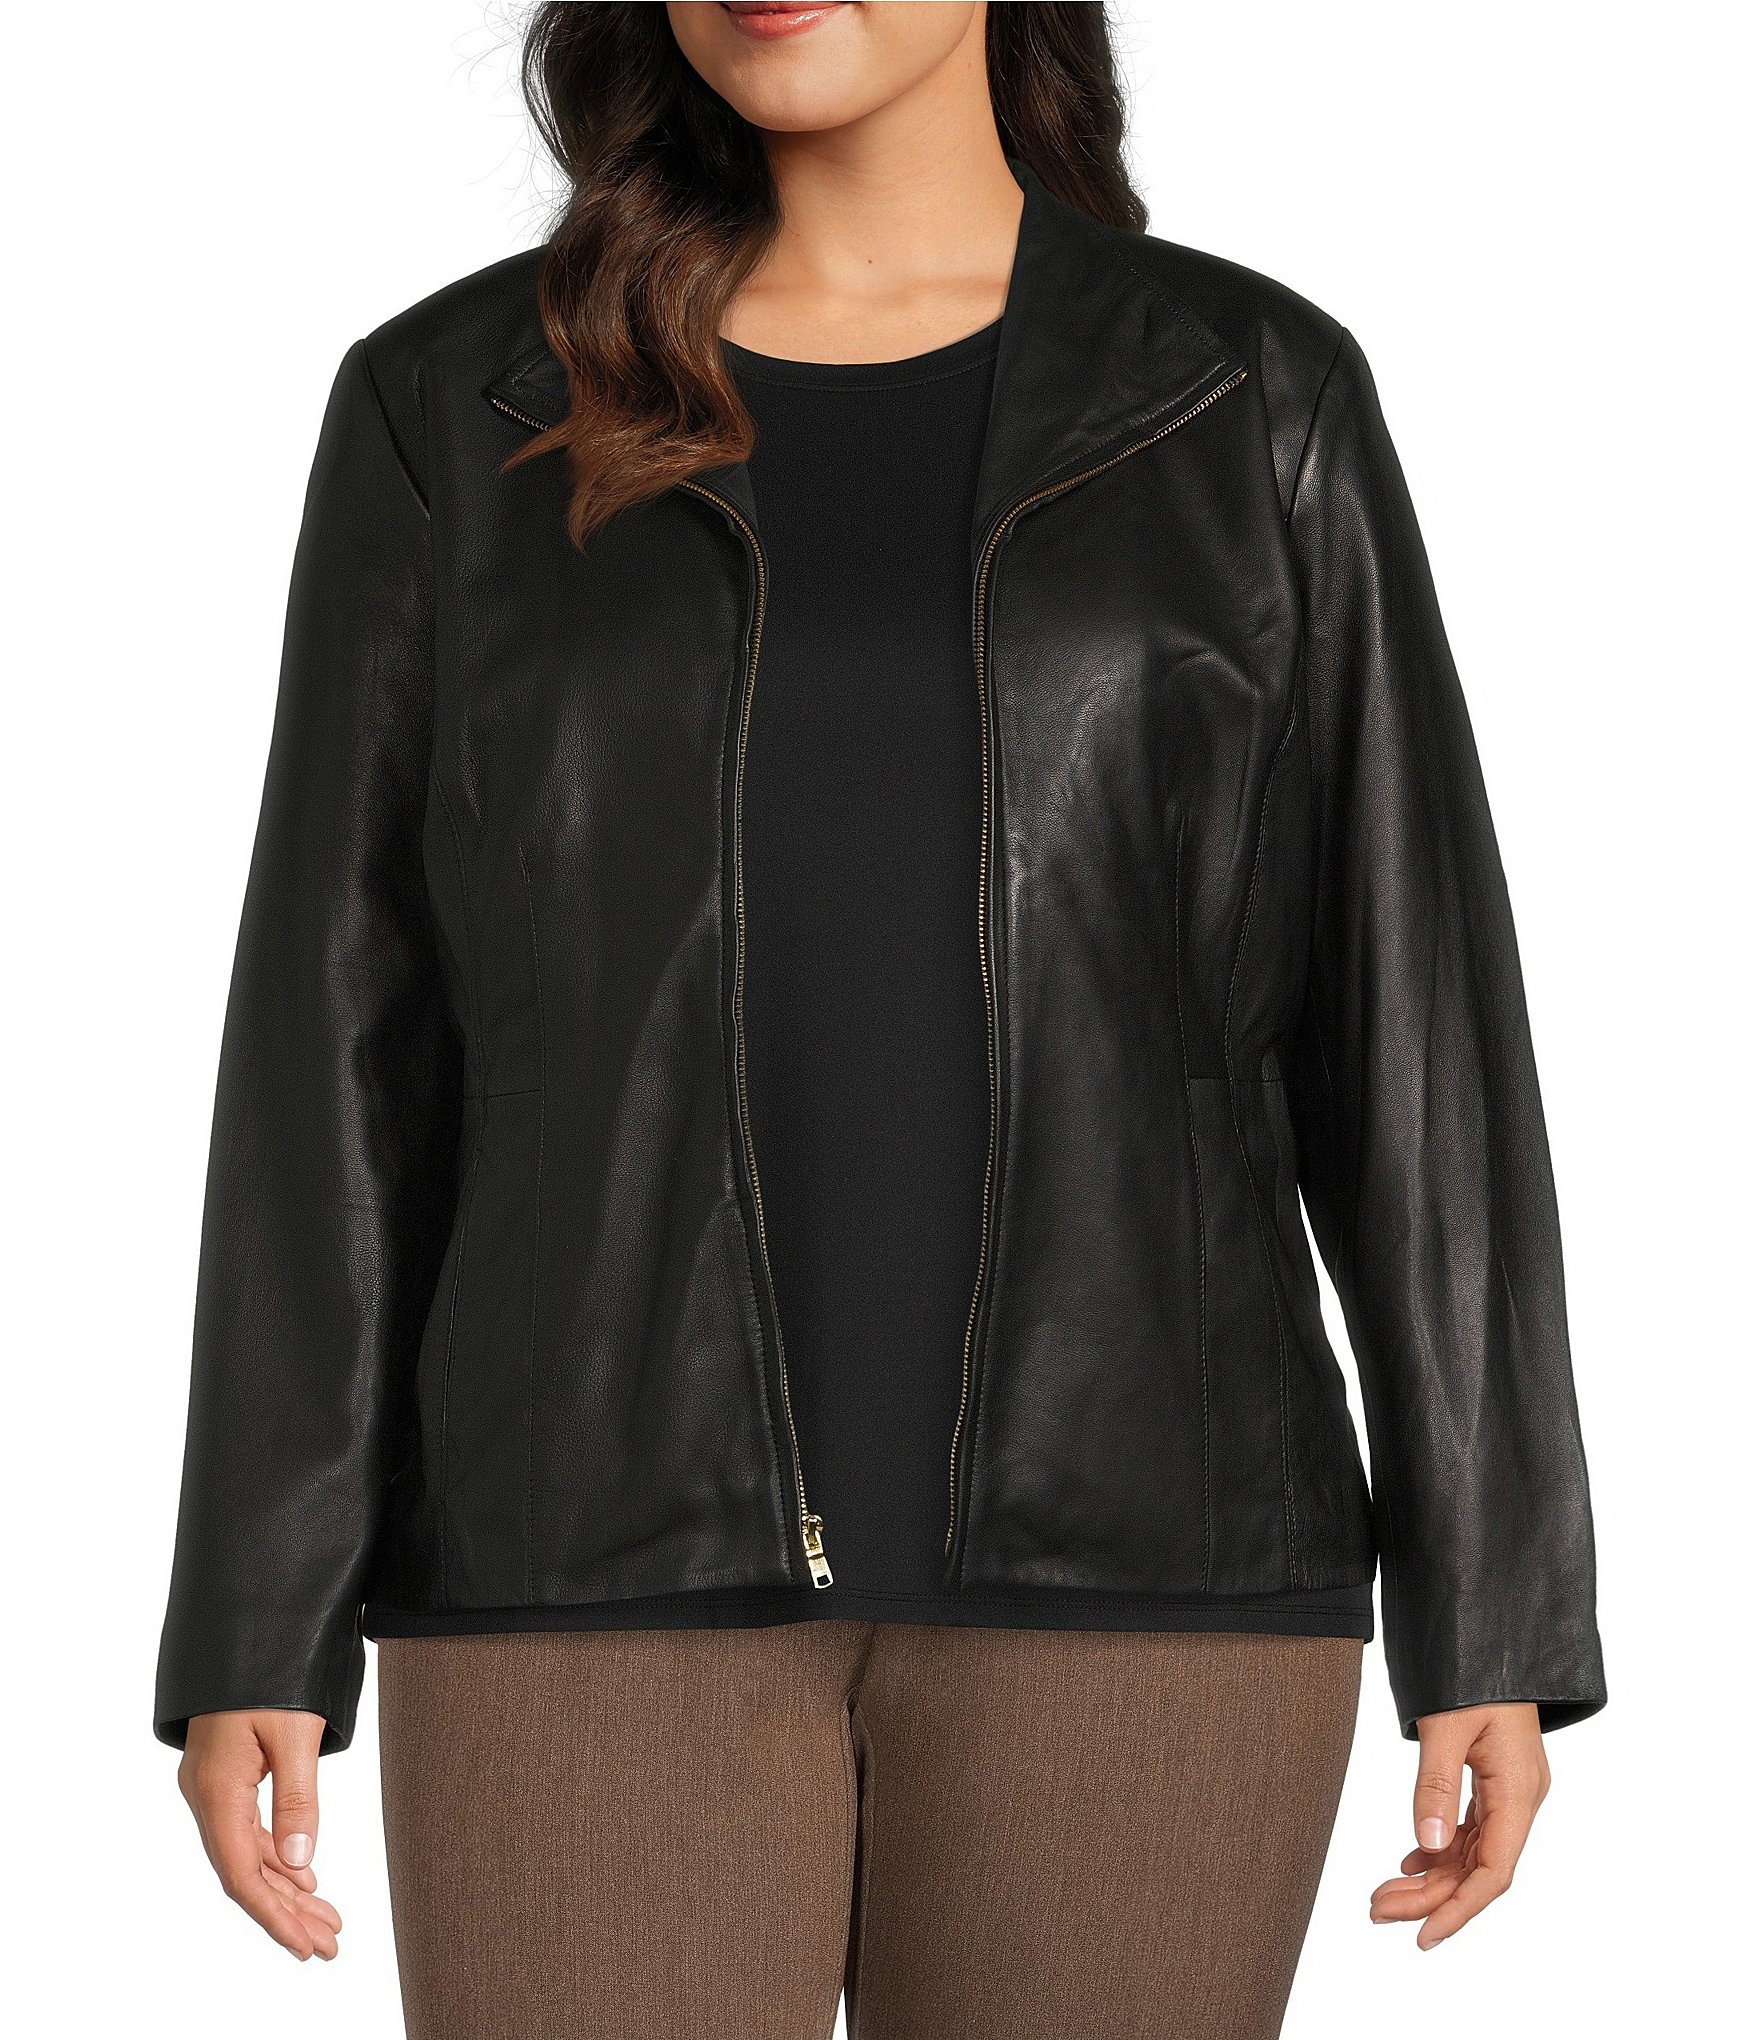 Women's Plus Size Leather Coat  KC Leather Signature Range